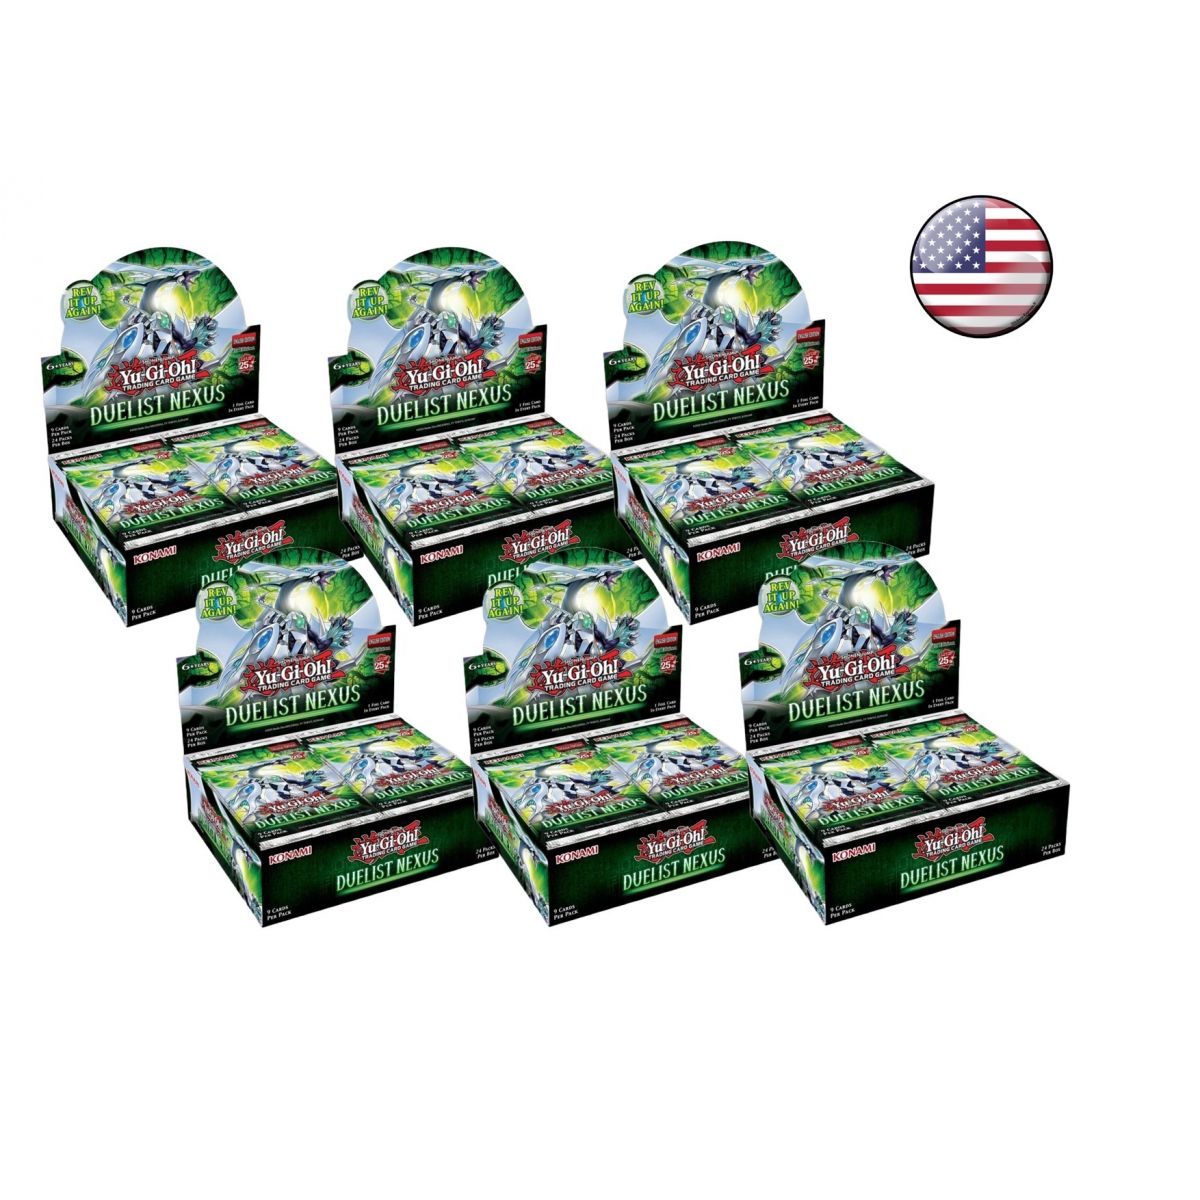 Yu Gi Oh! - Display - Lot of 6 Box of 24 Boosters - Duelist Nexus - US